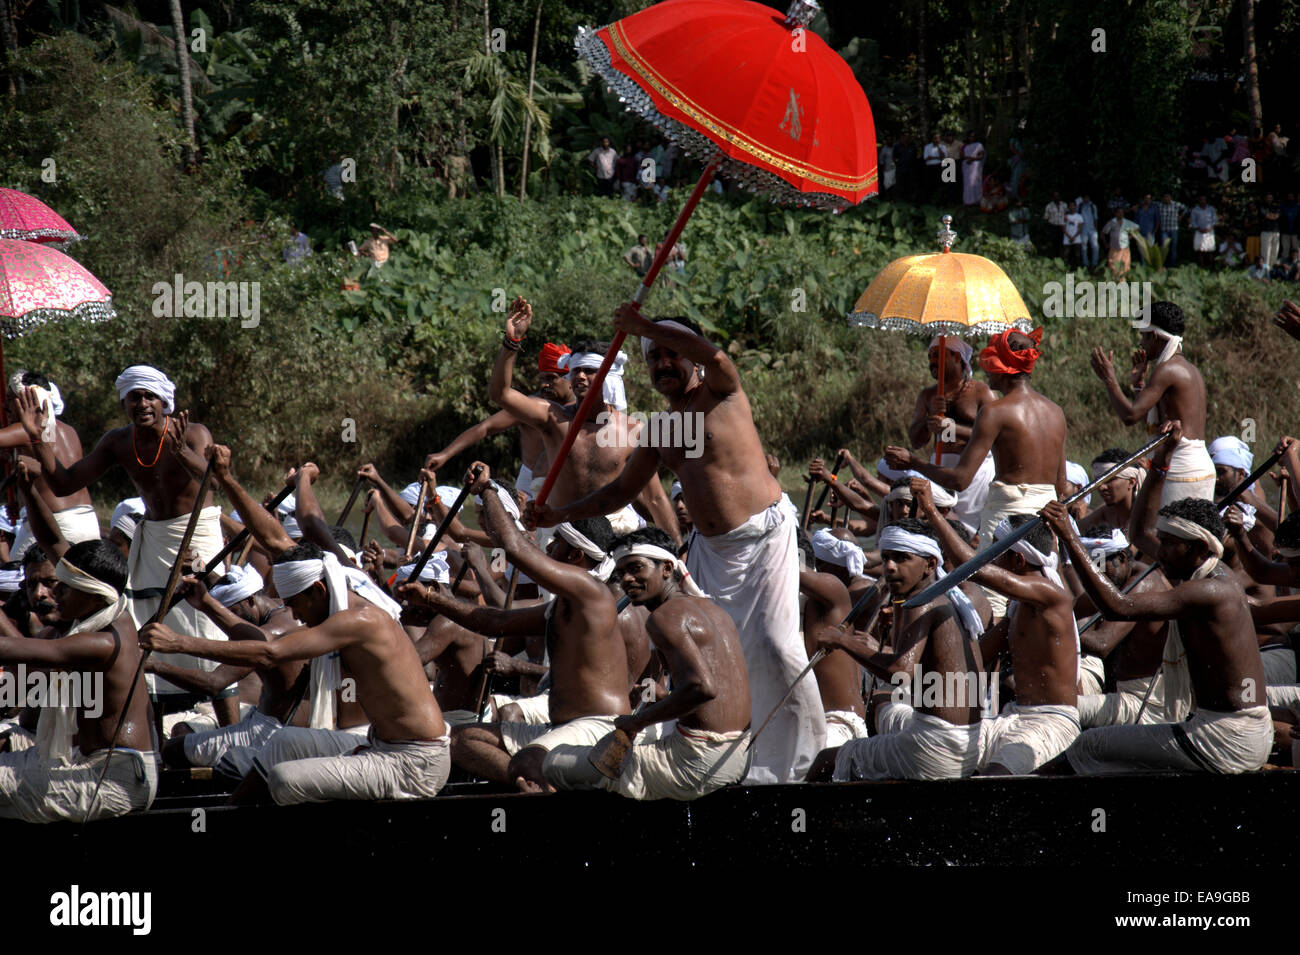 Aranmula Vallamkali (Aranmula Snake Boat Race) festival, held during Onam in the Southwest Indian State of Kerala. Stock Photo